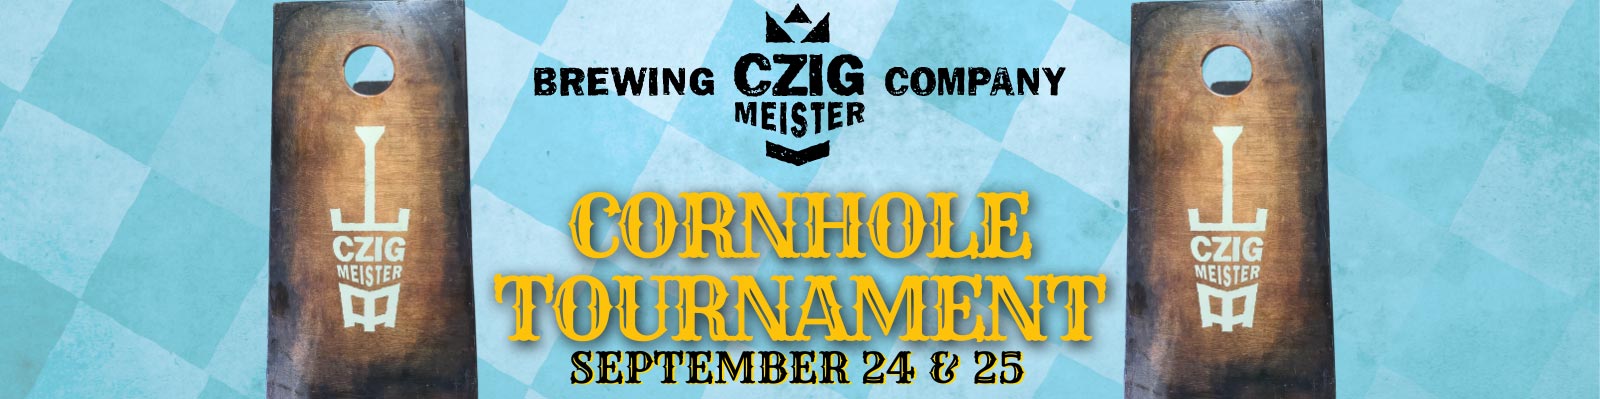 Czig Meister 2022 Okoberfest cornhole tournament banner